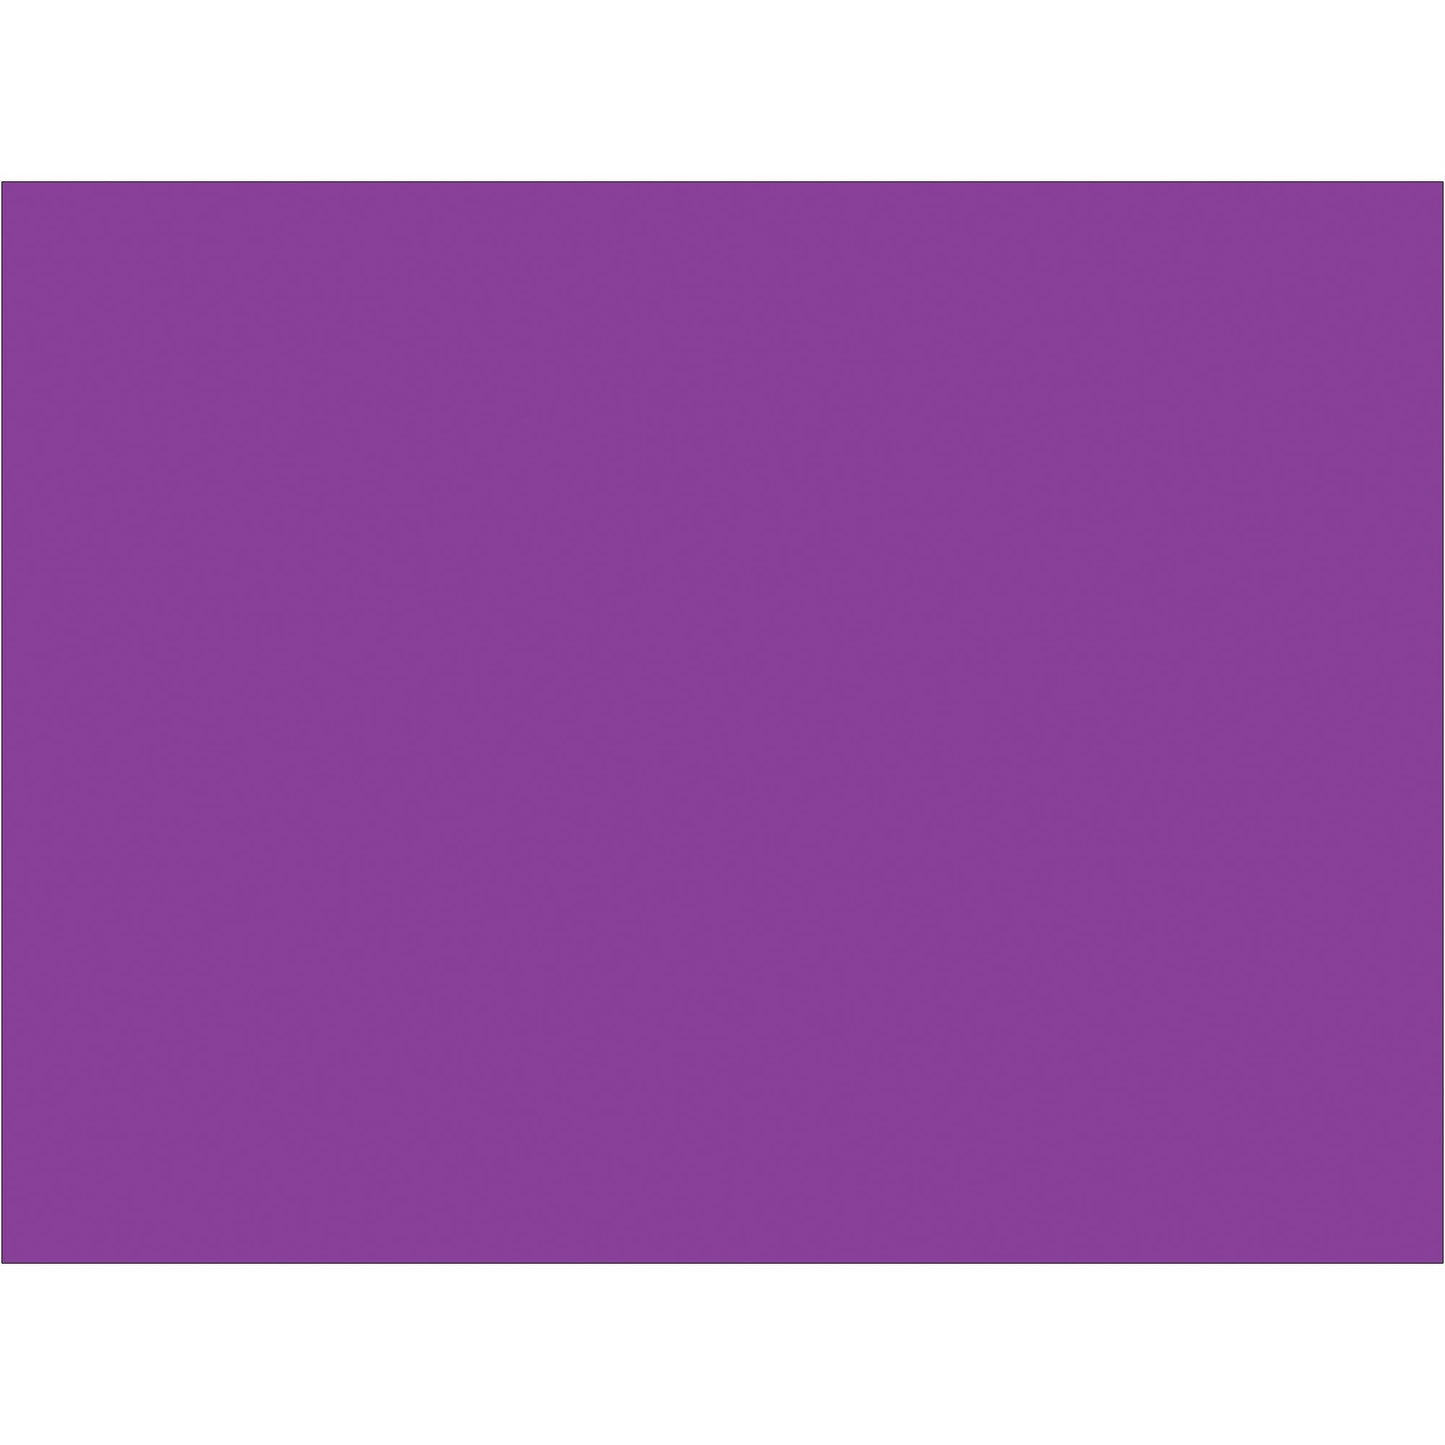 3 x 4" Purple Inventory Rectangle Labels - DL631M